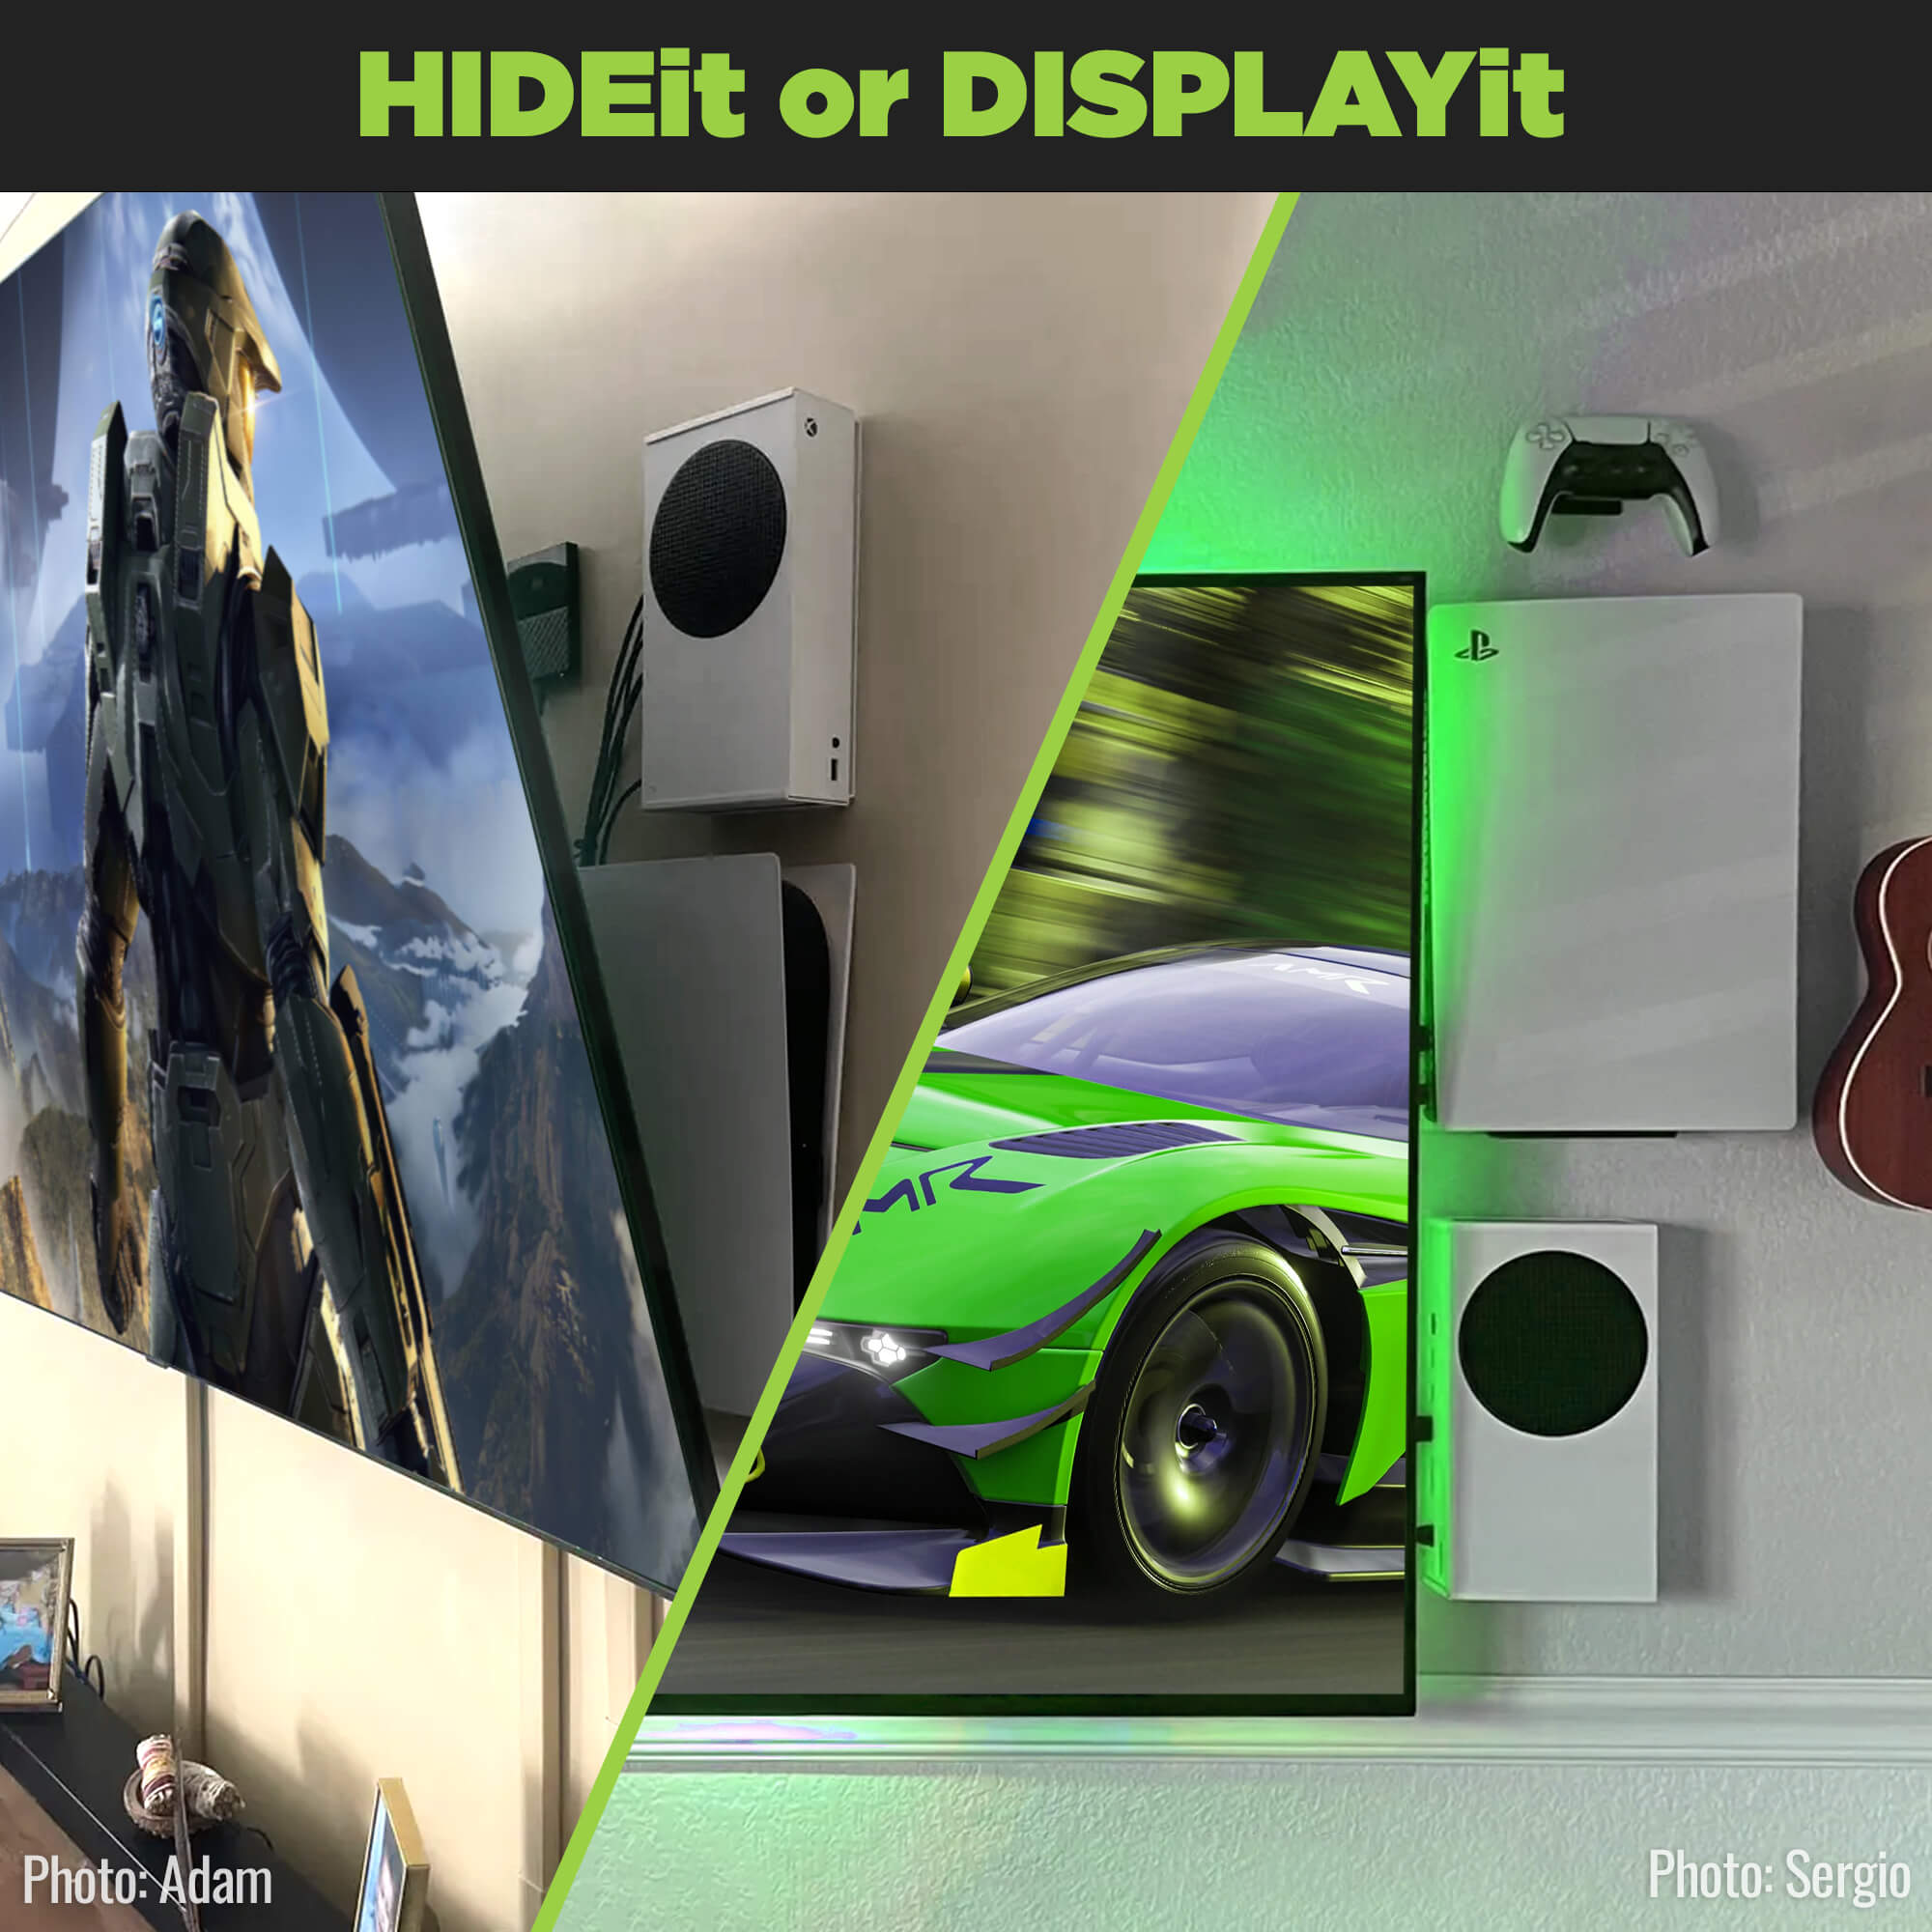 HIDEit Series S  Microsoft Xbox Series S Mount – HIDEit Mounts